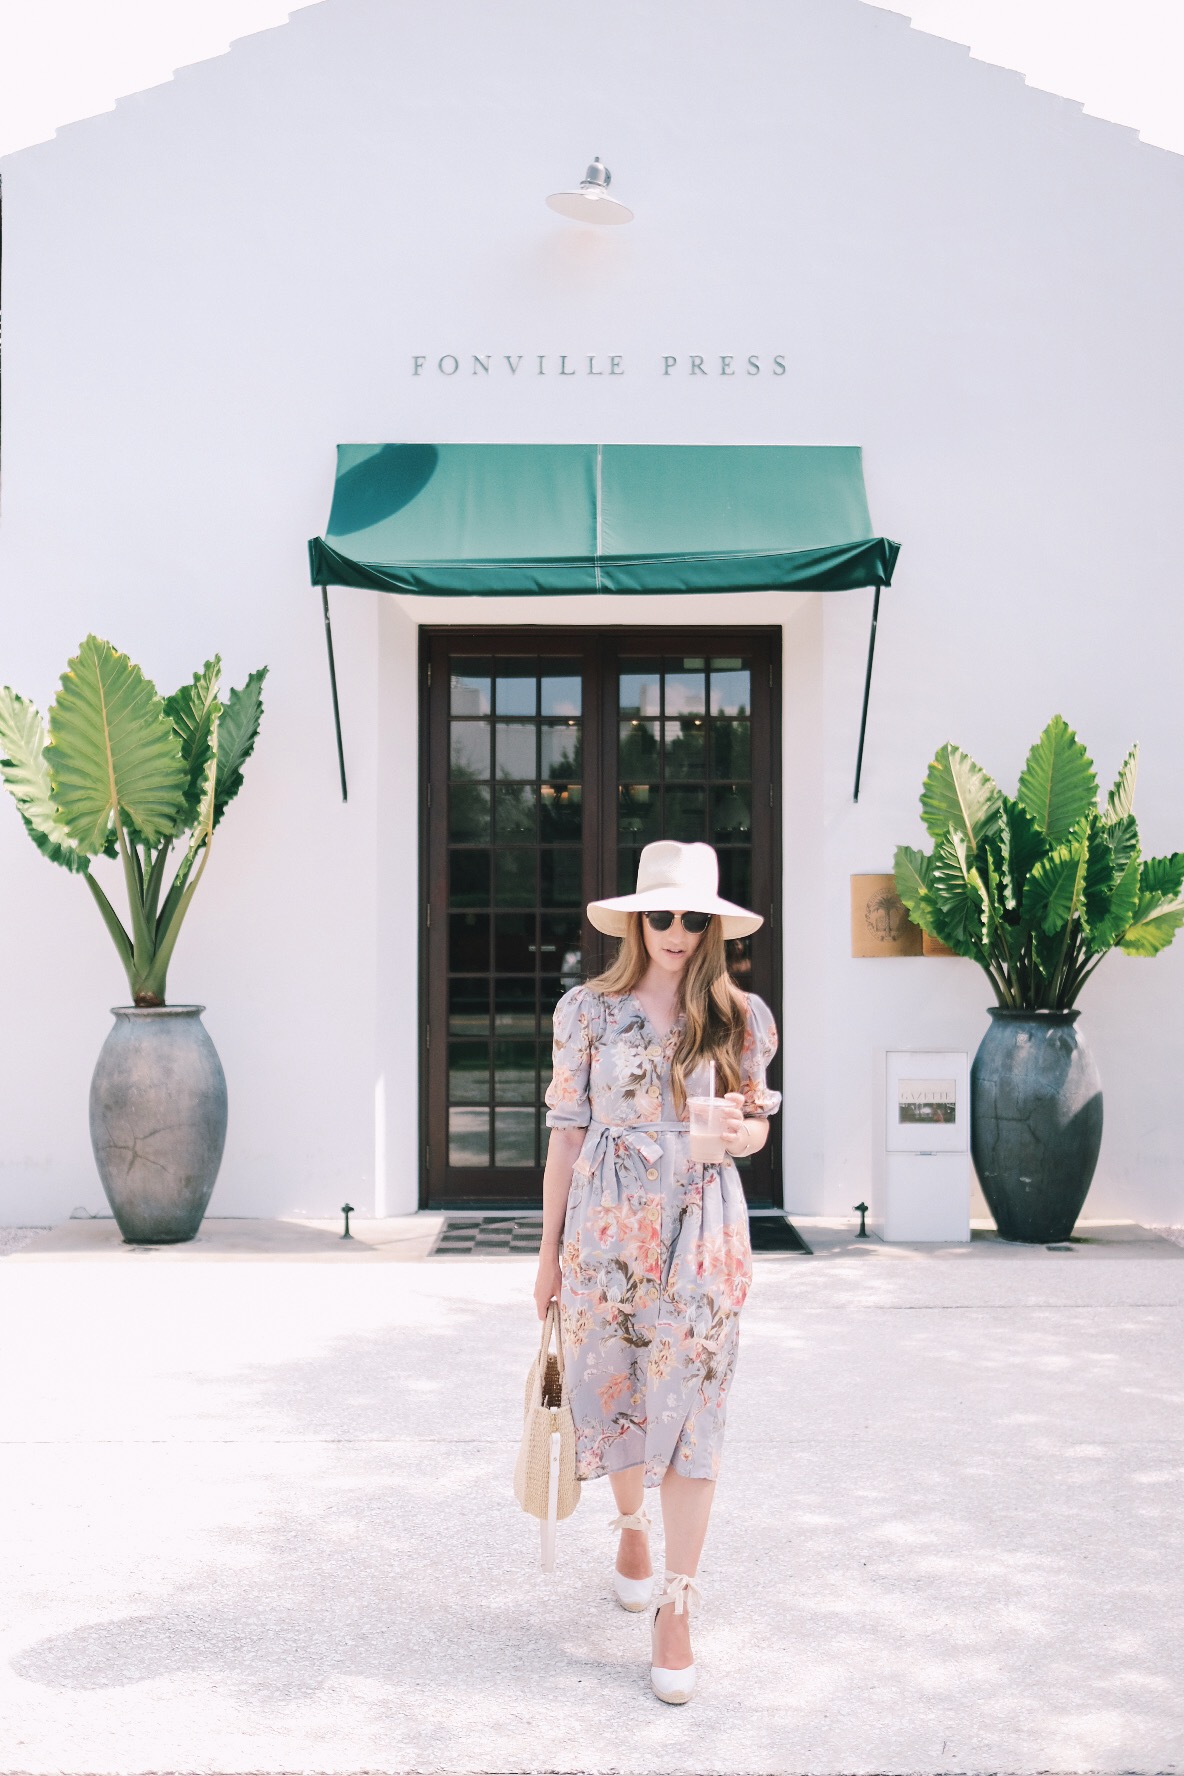 Fonville Press in Florida | Miss Madeline Rose